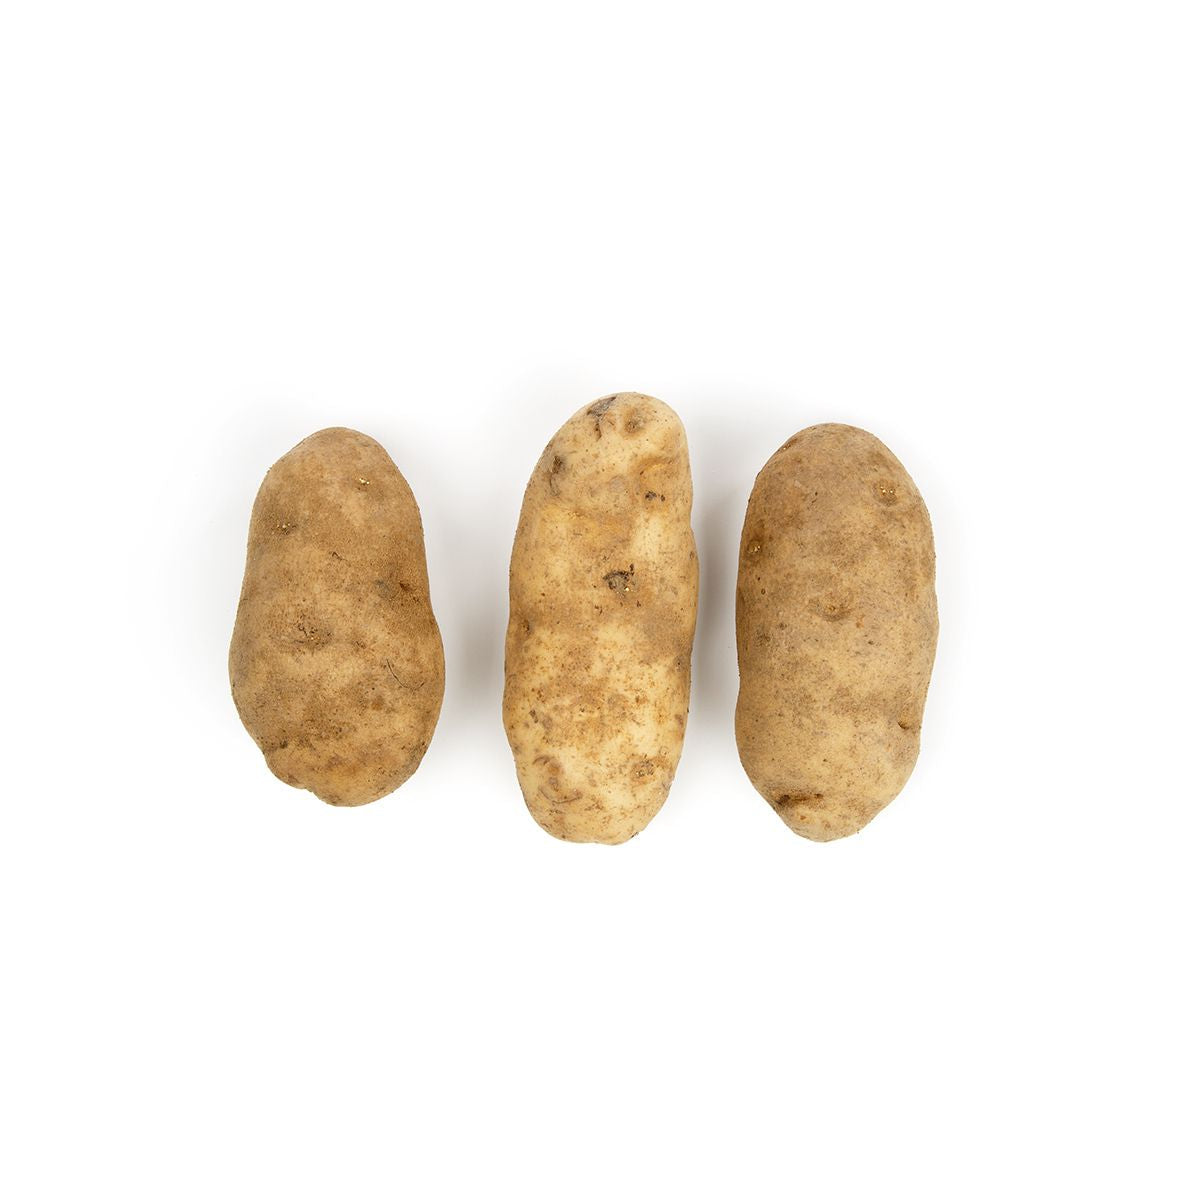 Potatoes Of Idaho GPOD Potatoes 80 CT